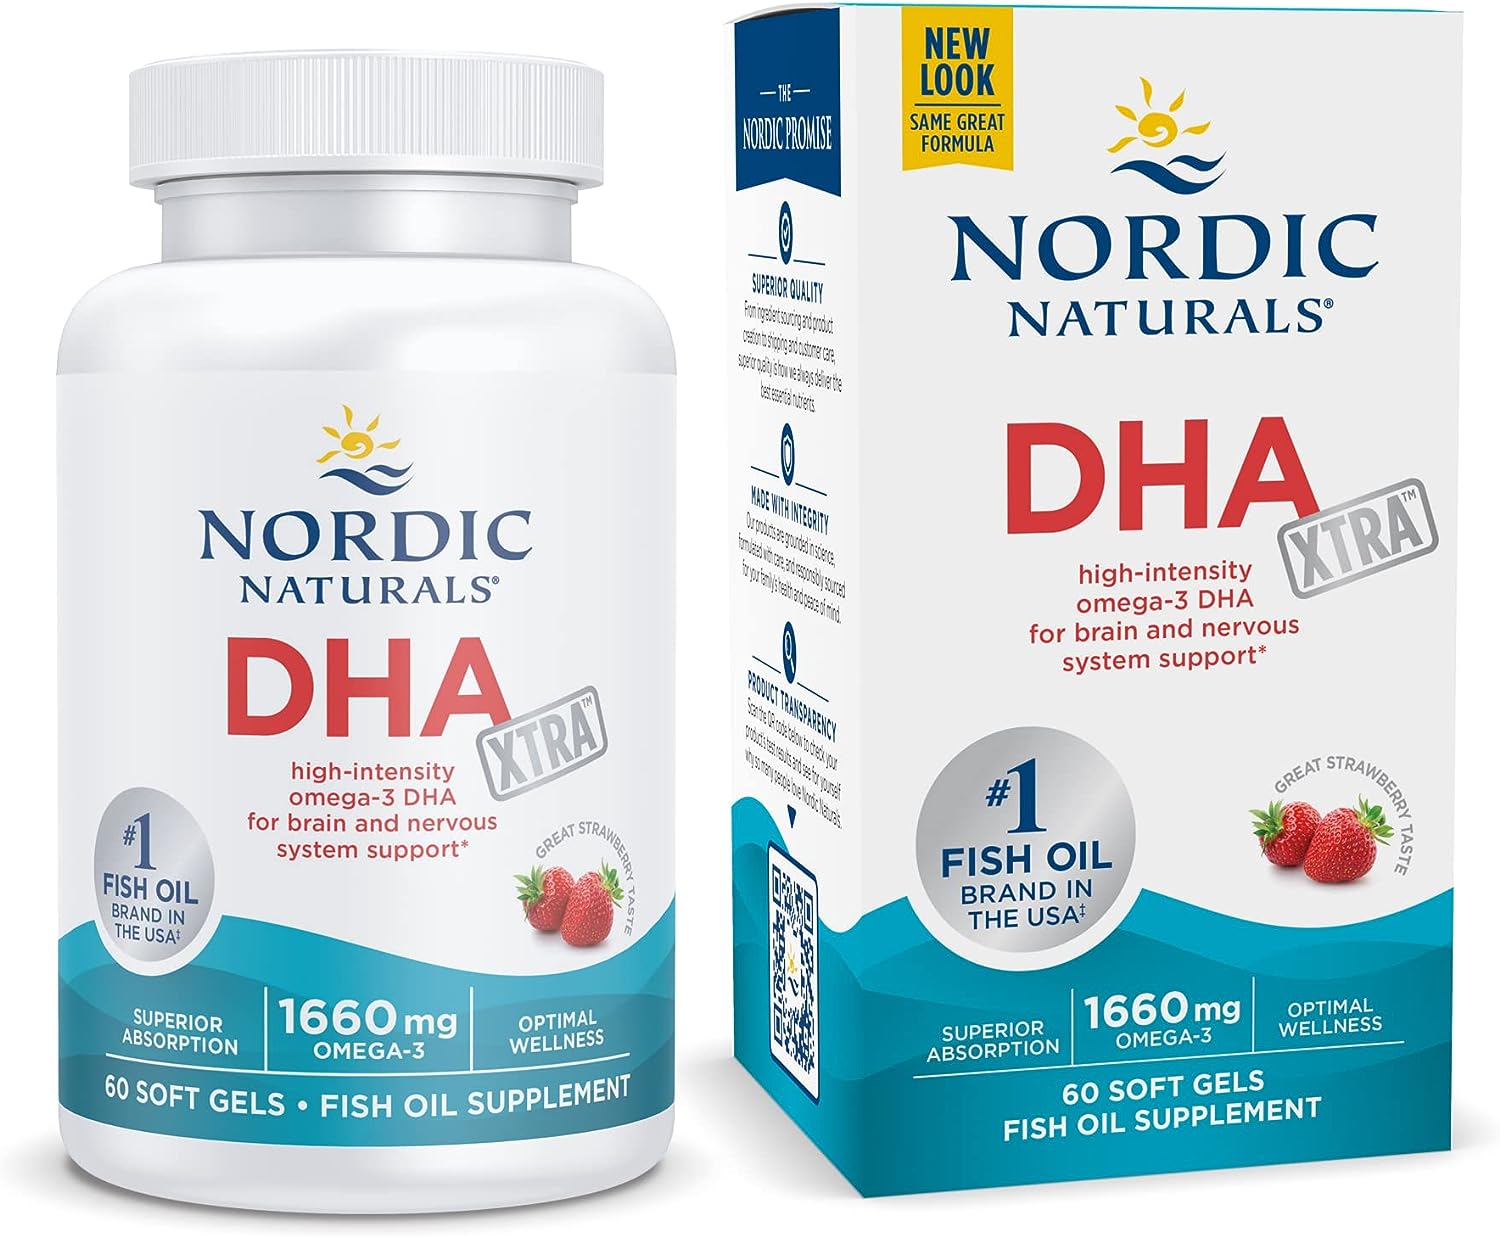 Nordic Naturals DHA Xtra, Strawberry - 60 Soft Gels - 1660 mg Omega-3